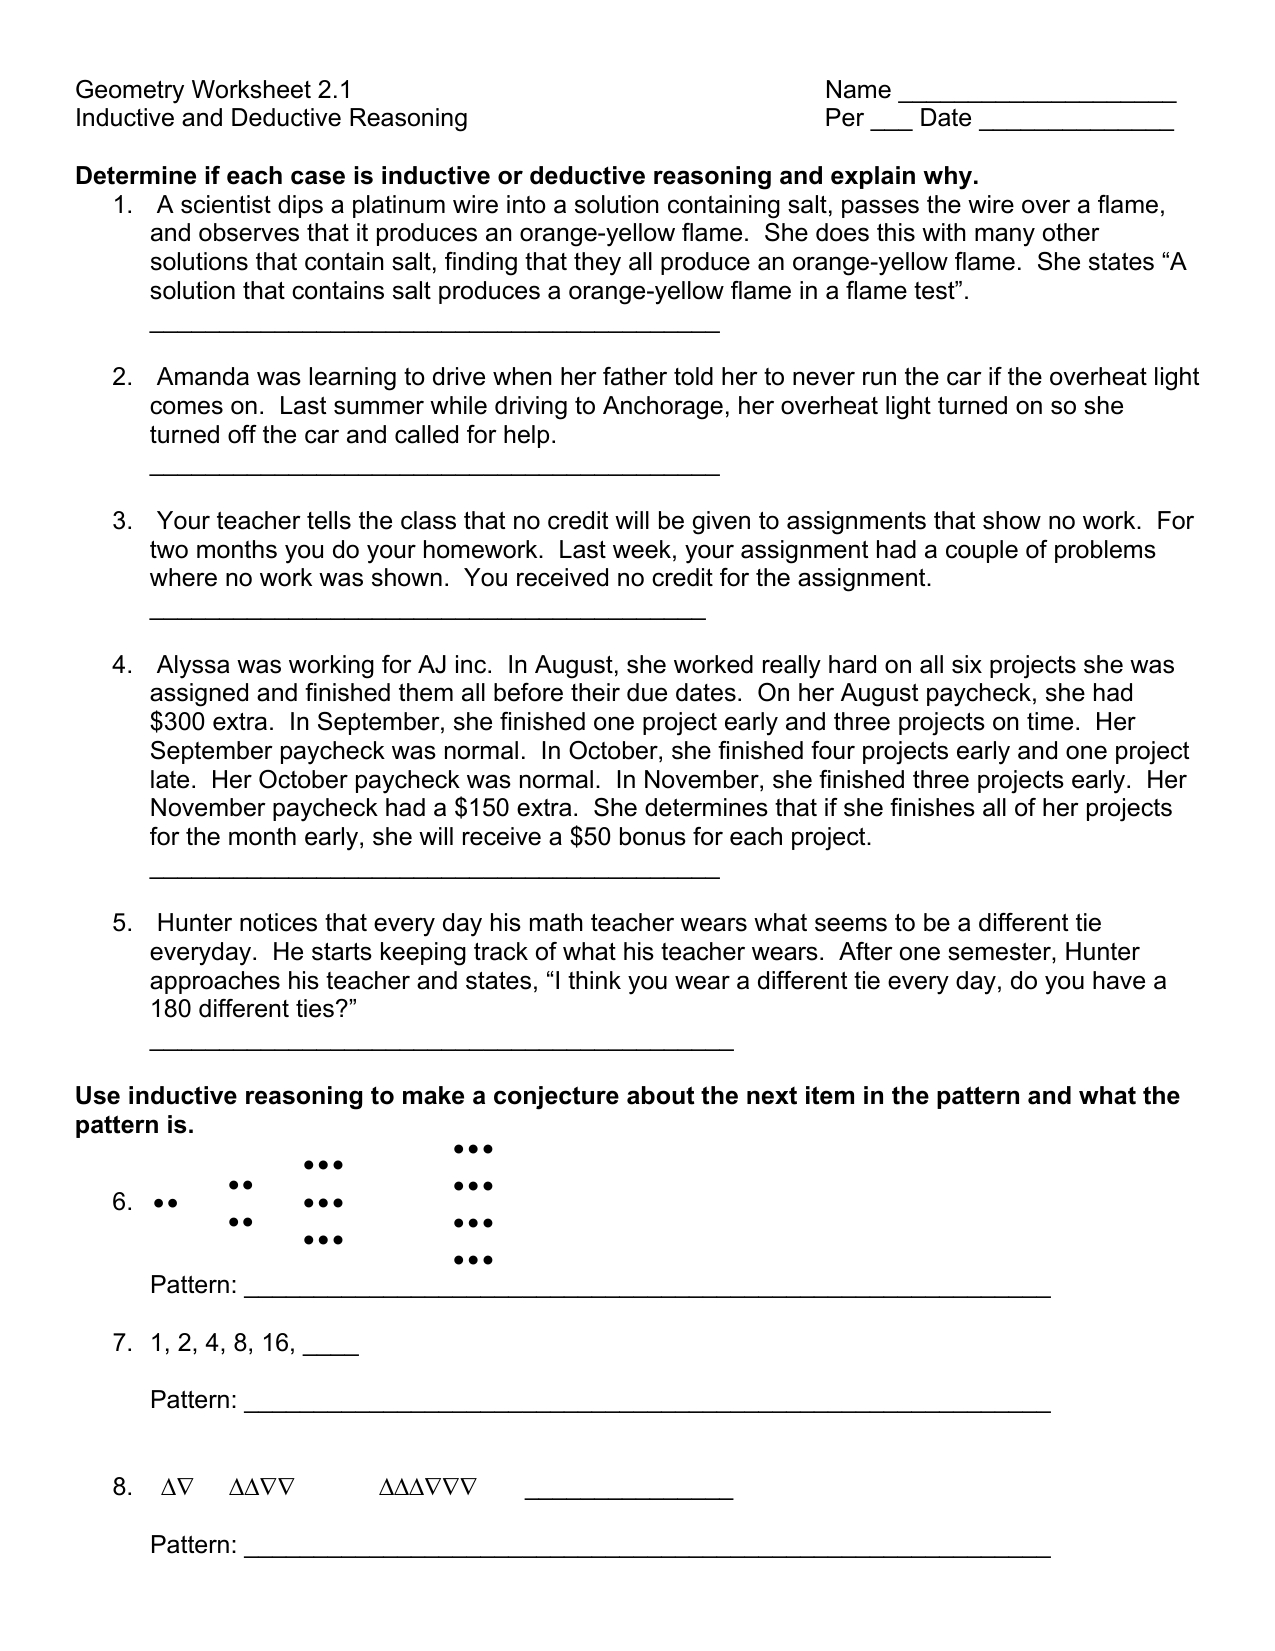 Geometry Worksheet 21 Name Inductive And Deductive Reasoning And Inductive And Deductive Reasoning Worksheet